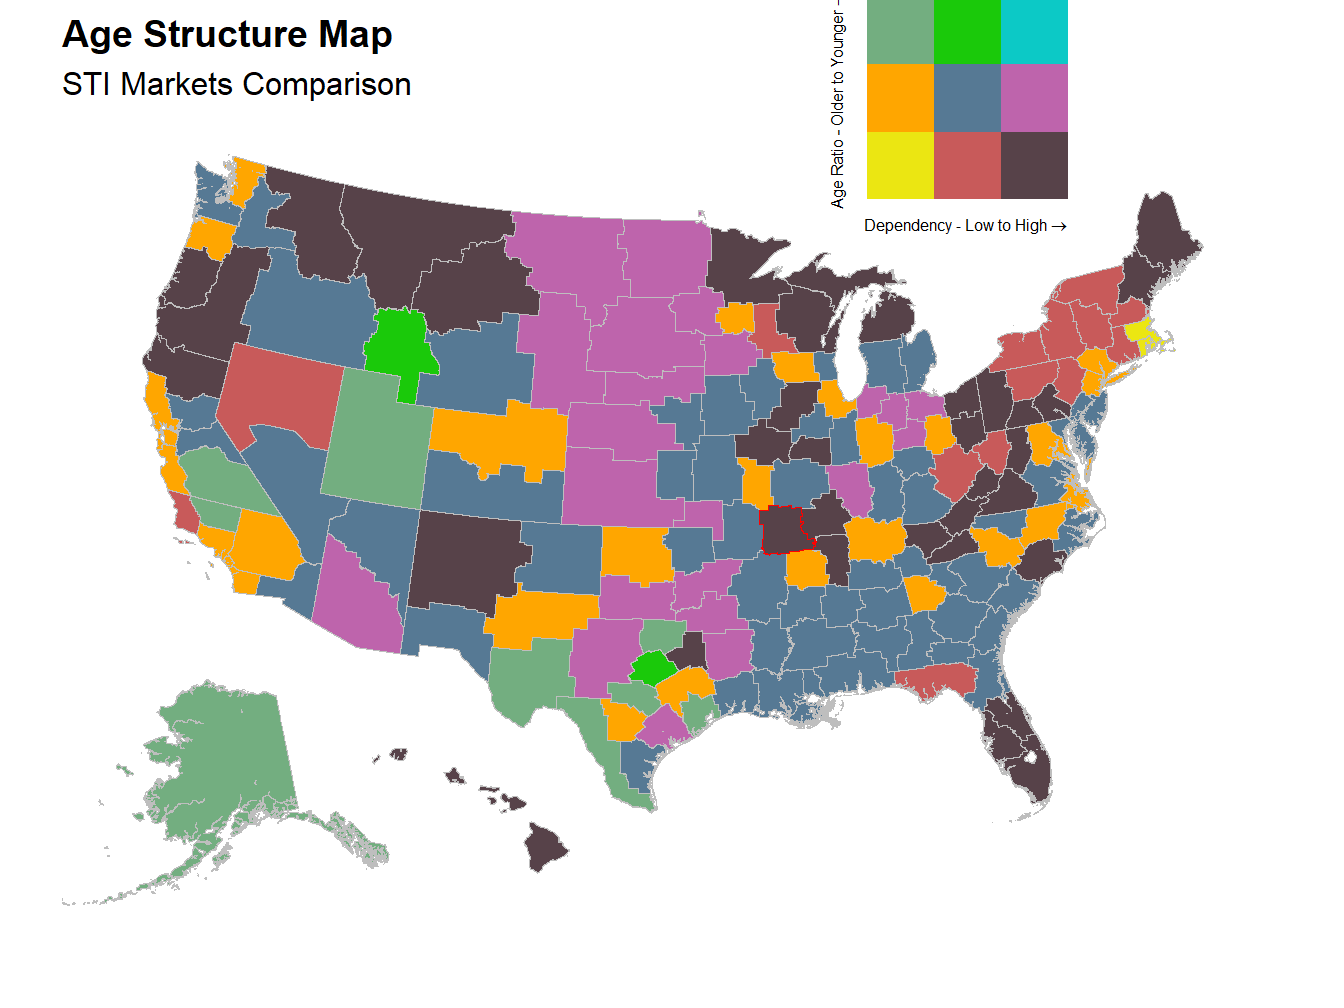 Age Structure Map - STI Markets